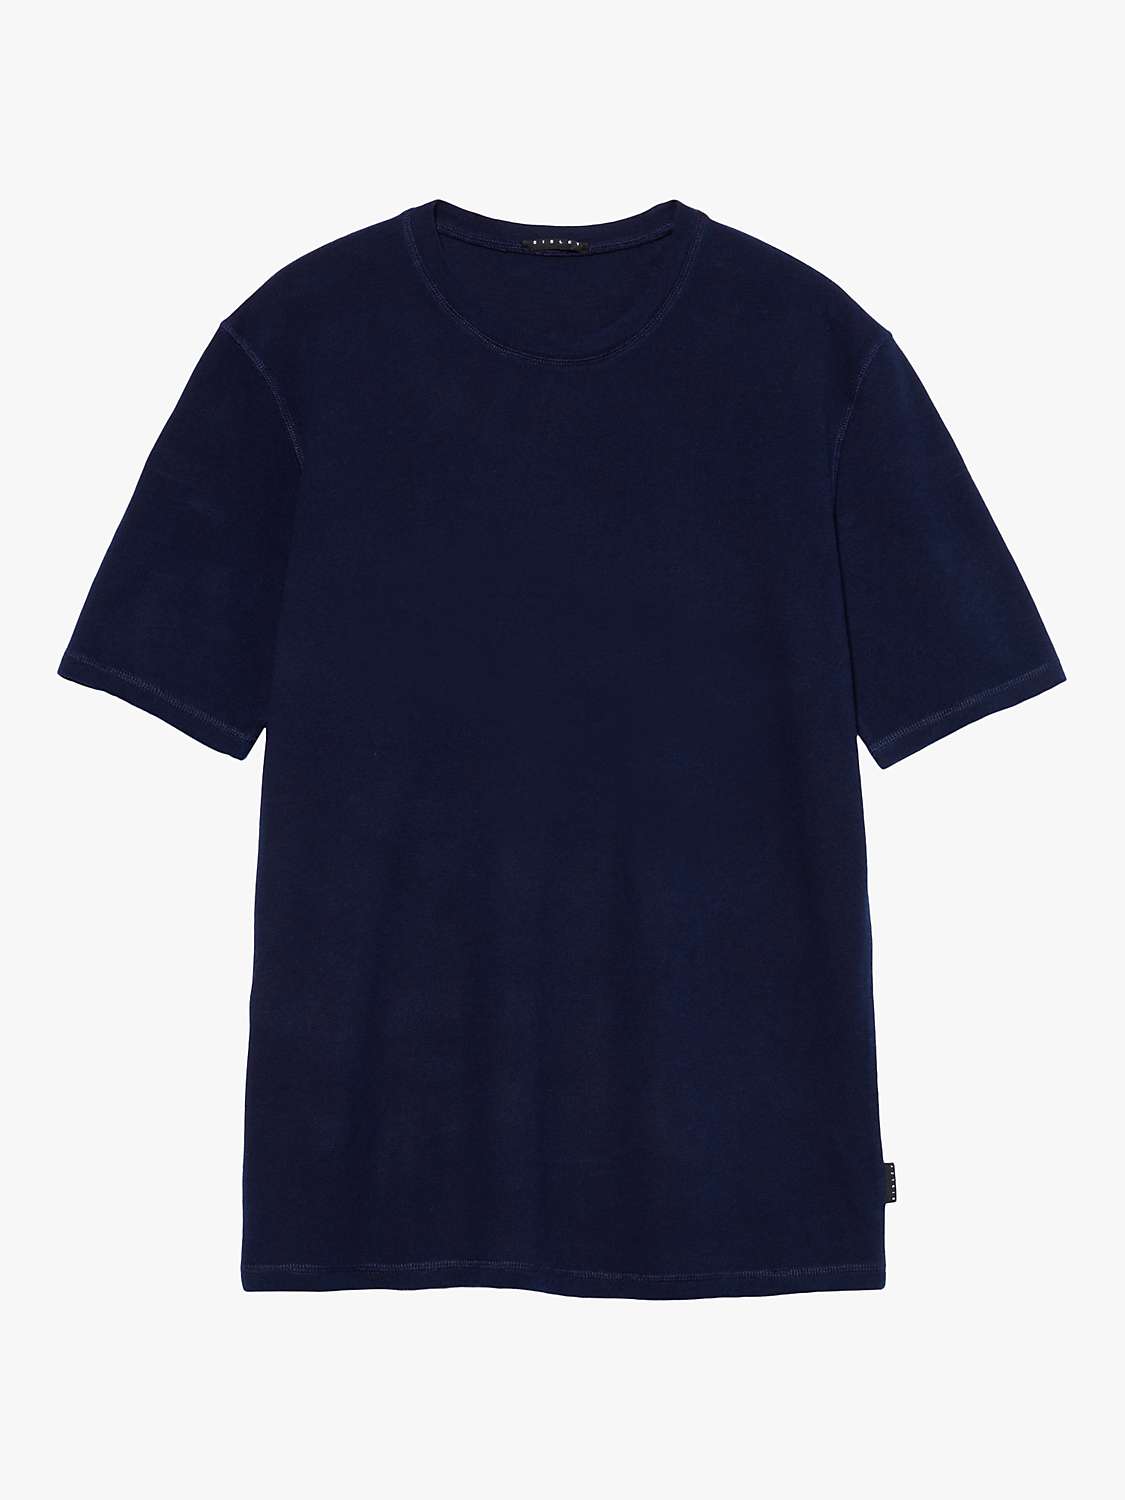 Buy SISLEY Cotton Pique T-Shirt, Navy Online at johnlewis.com